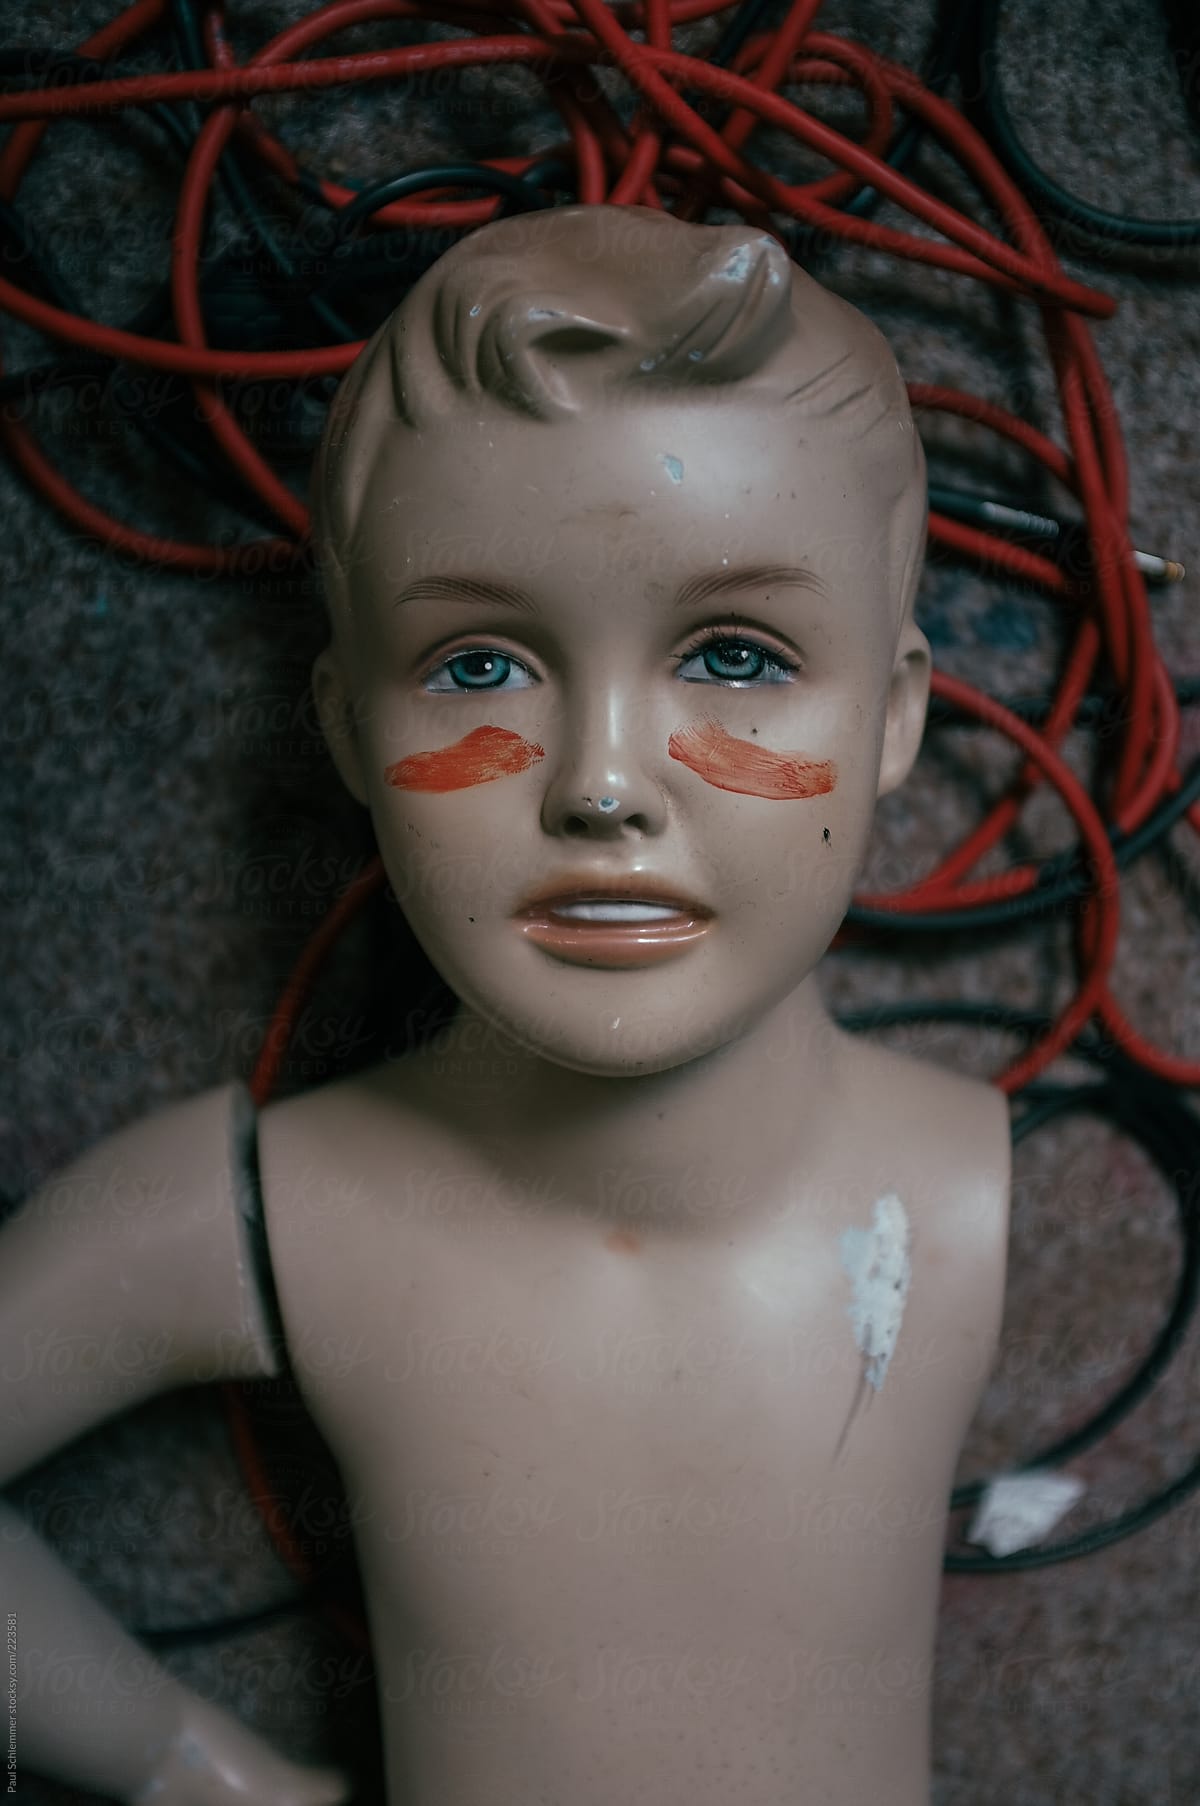 creepy boy figurine portrait